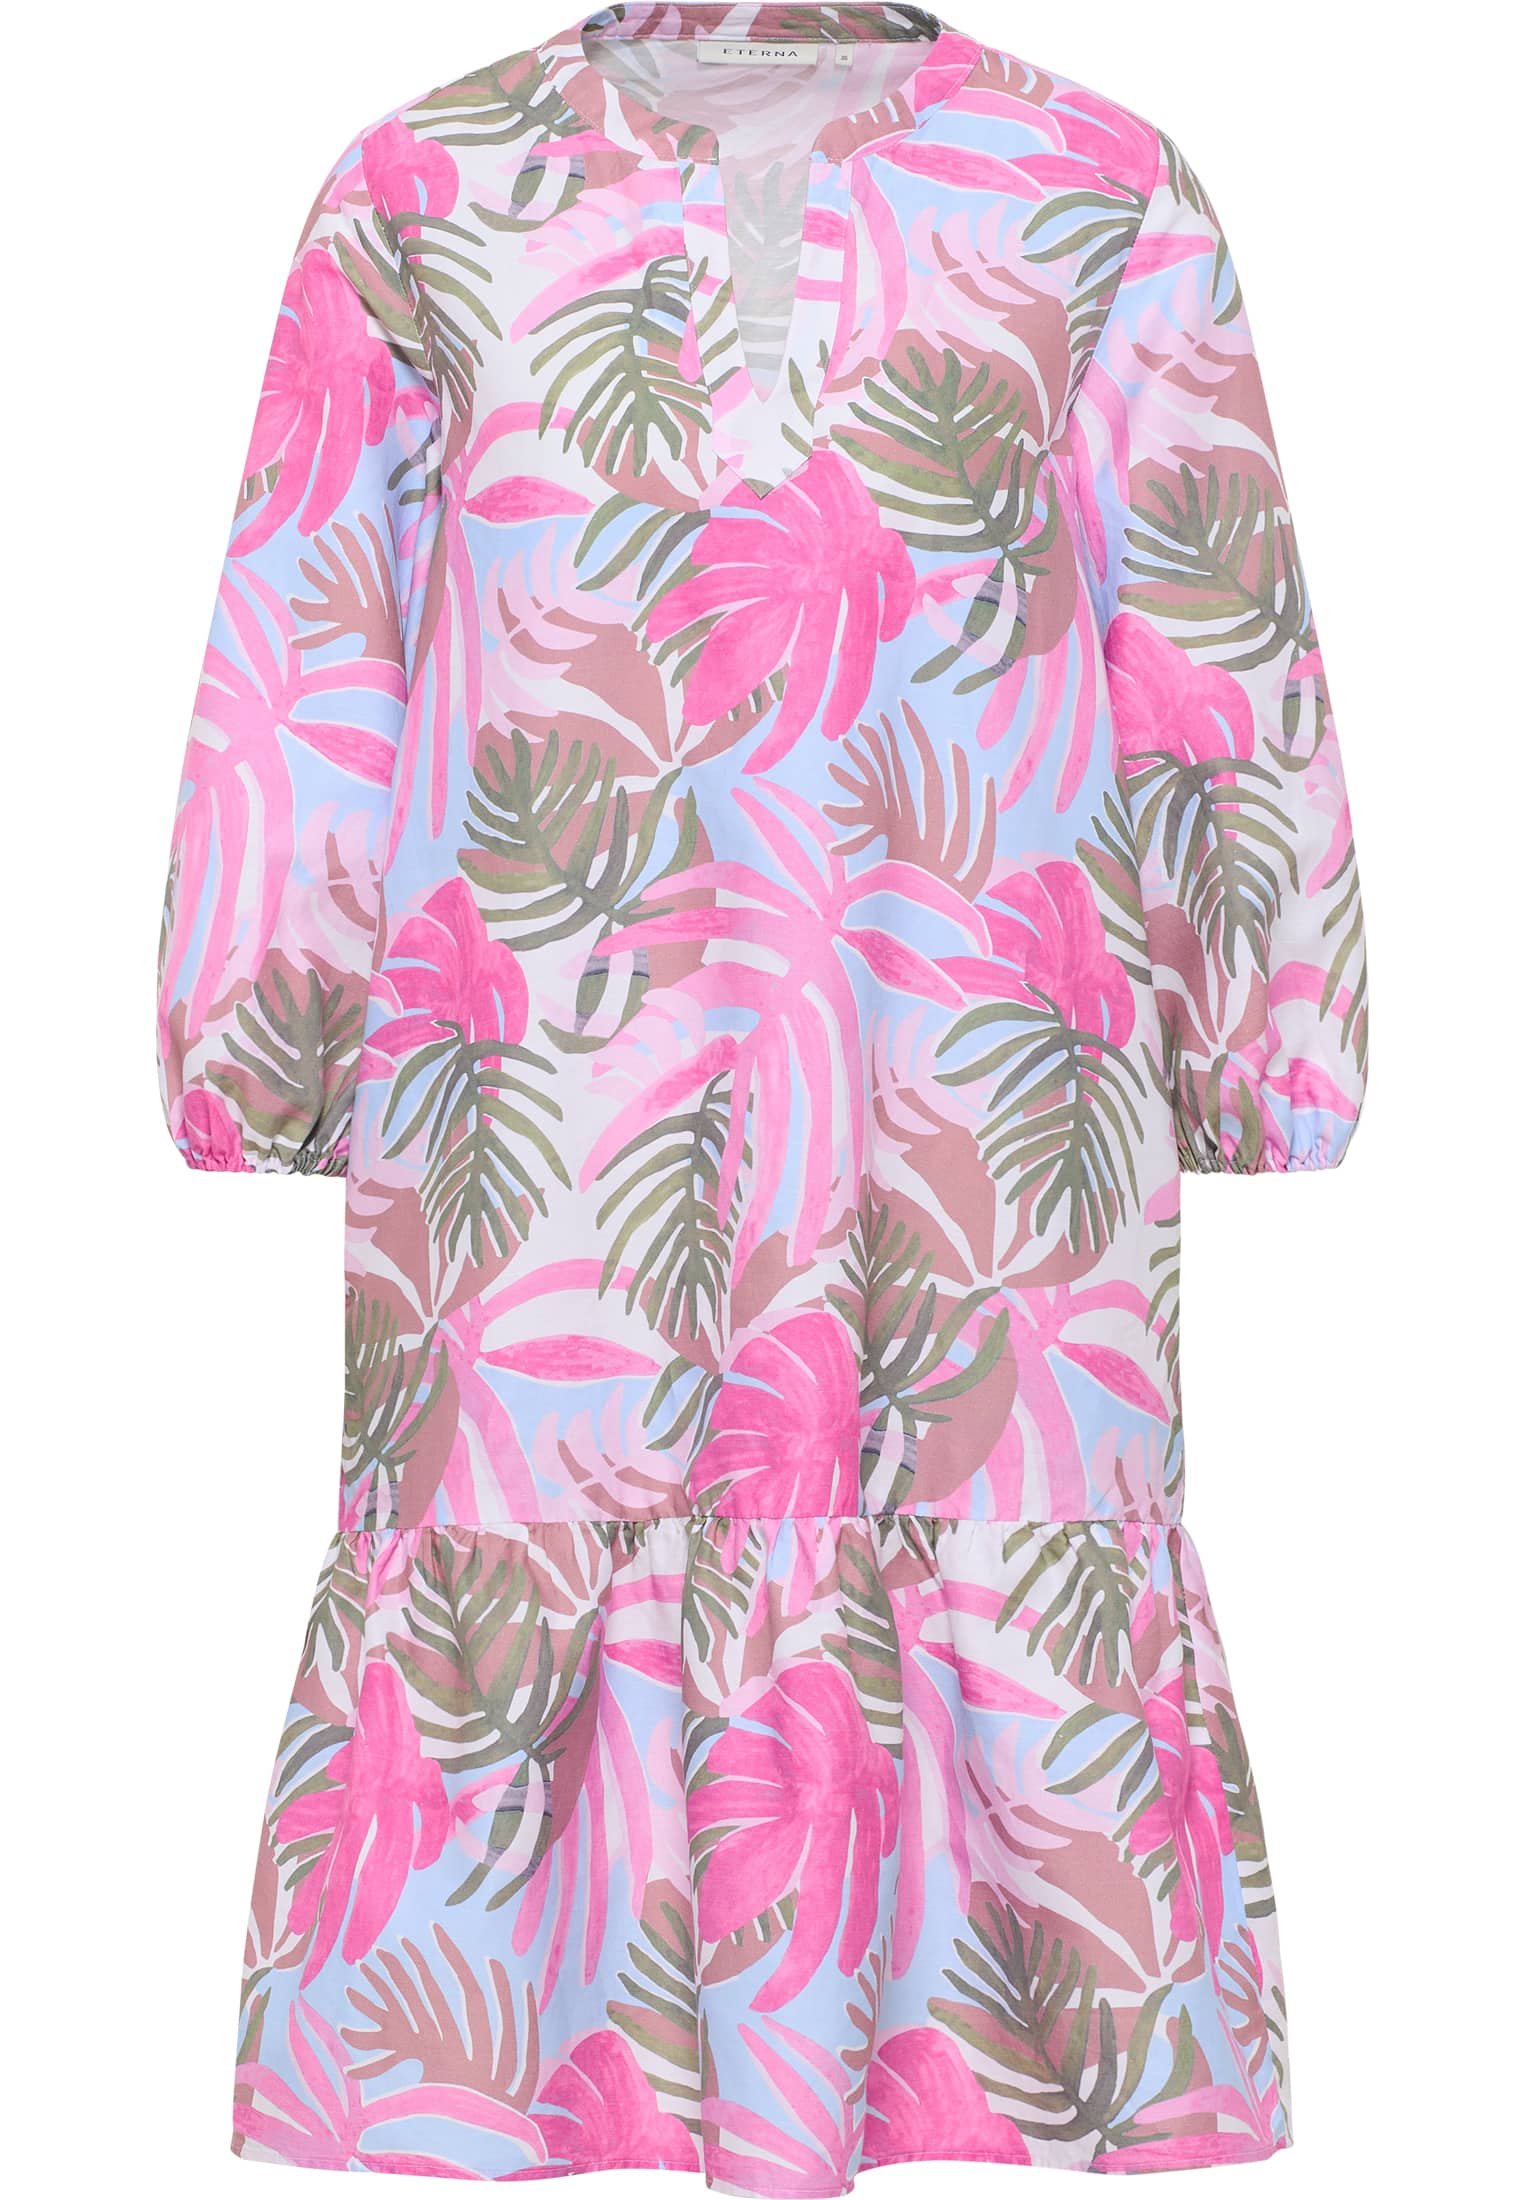 Shirt dress in rose printed | rose | 46 | 3/4 sleeves |  2DR00246-15-11-46-3/4